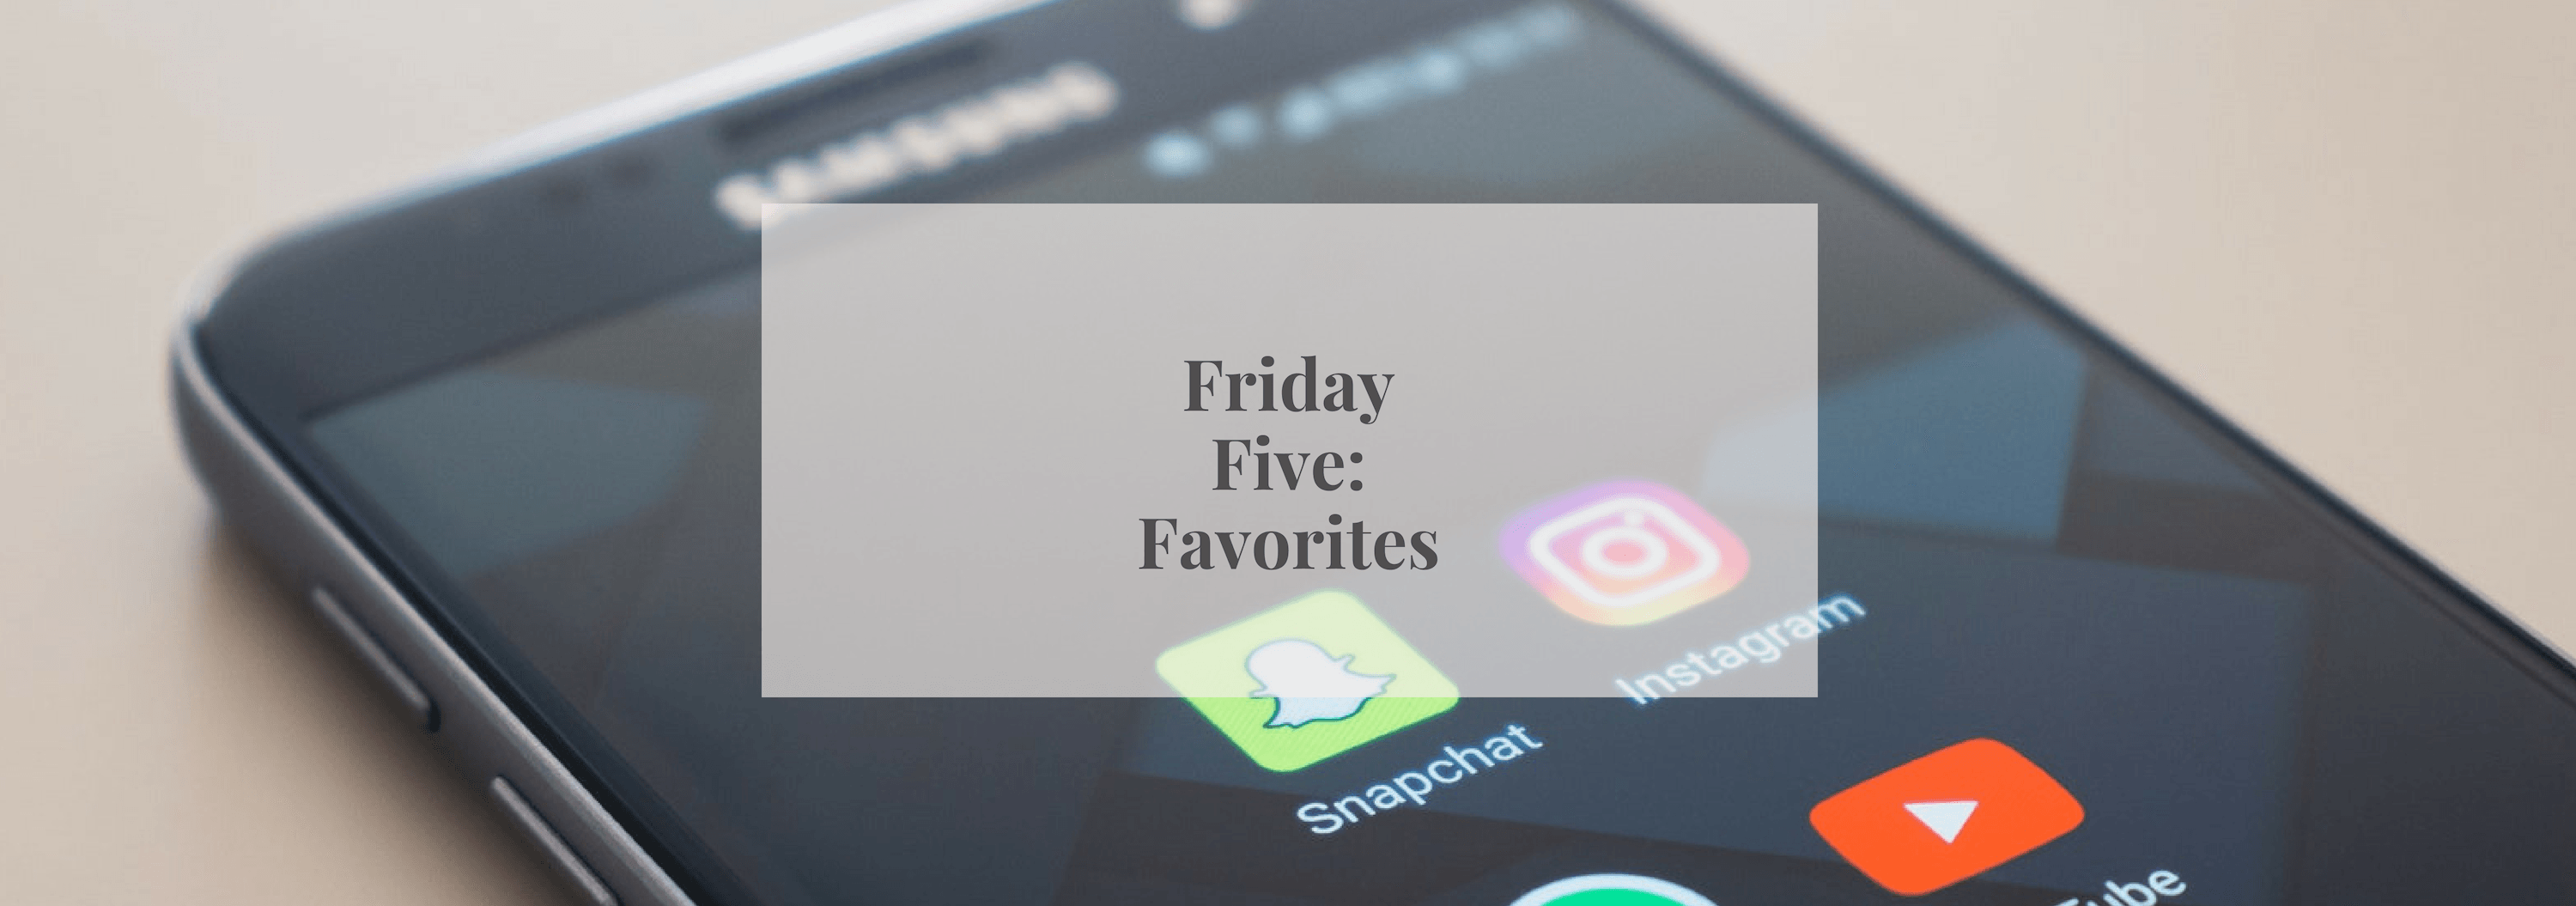 Friday Five - Numi